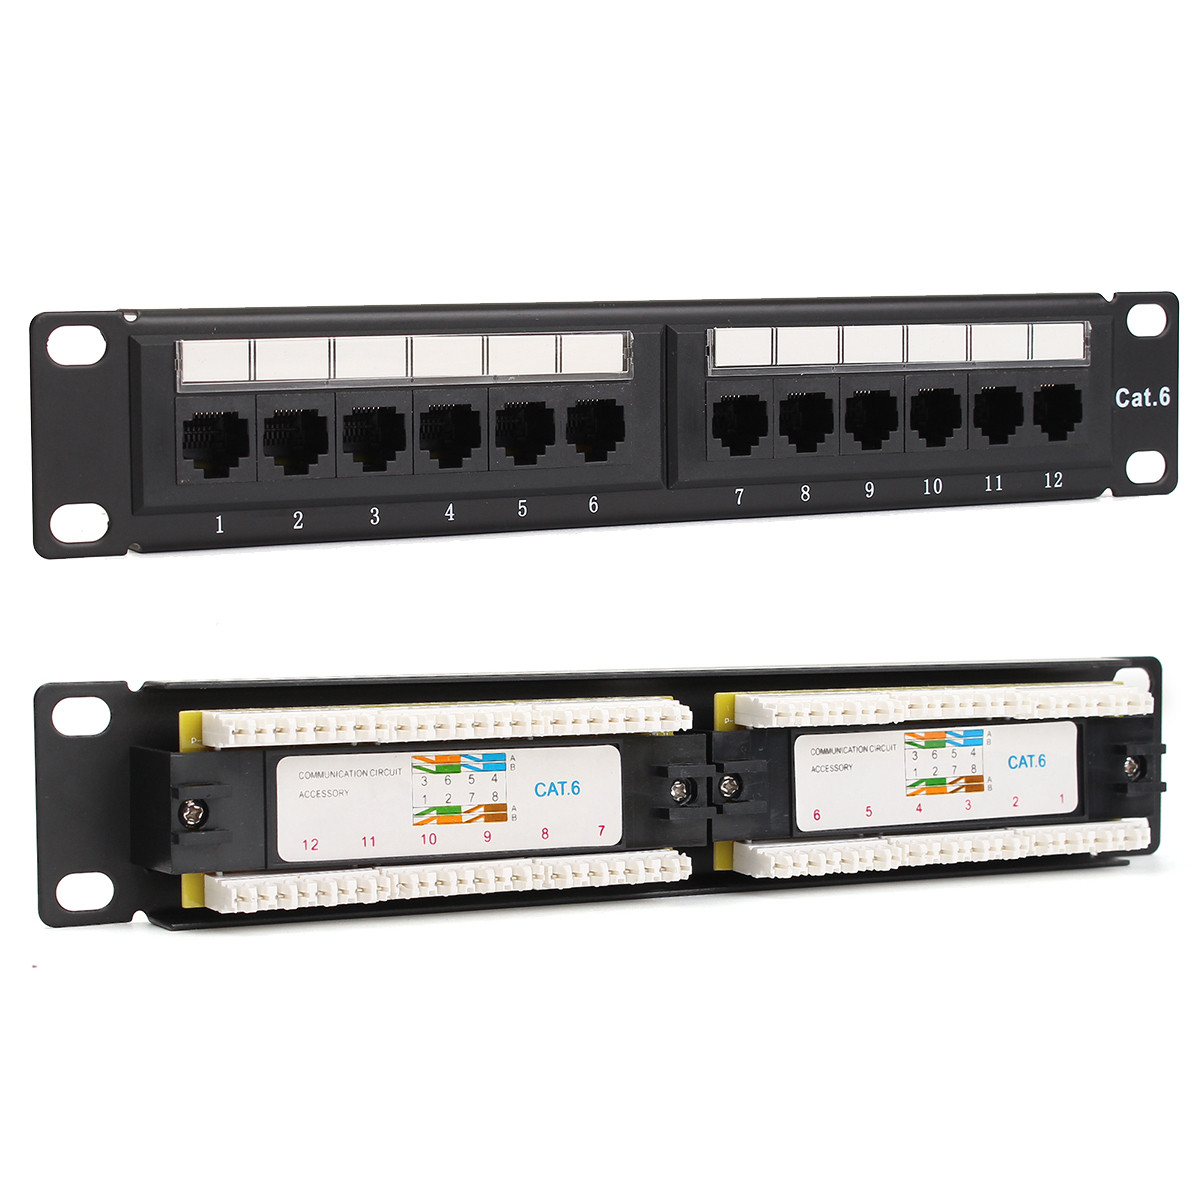 12-Port-Cat6-Cat5-RJ45-Patch-Panel-Ethernet-Network-Rack-Wall-Mounted-Bracket-1219880-2